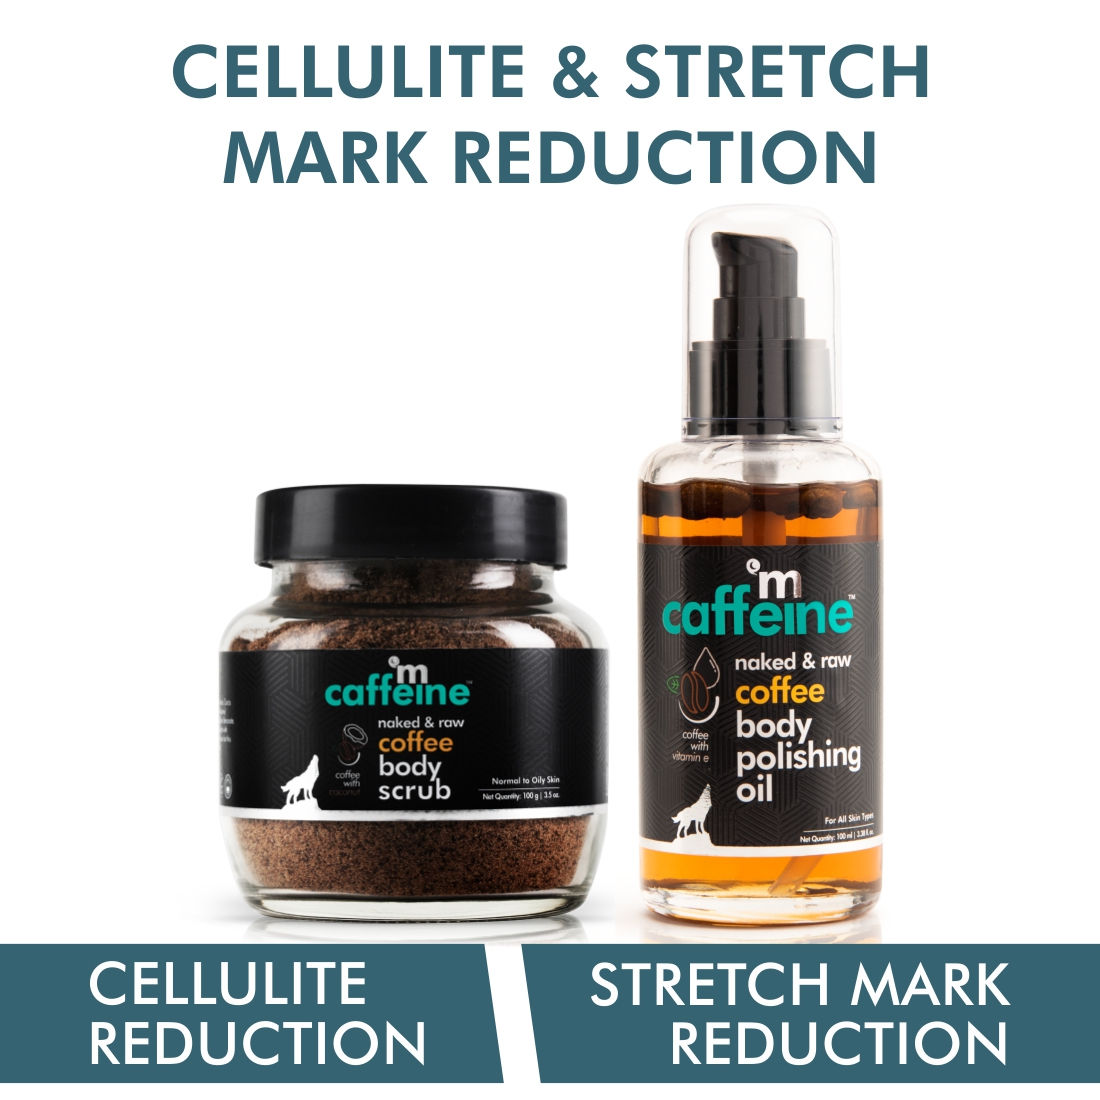 MCaffeine Cellulite & Stretch Mark Reduction Combo - Exfoliating Coffee Body Scrub & Body Massage Oil